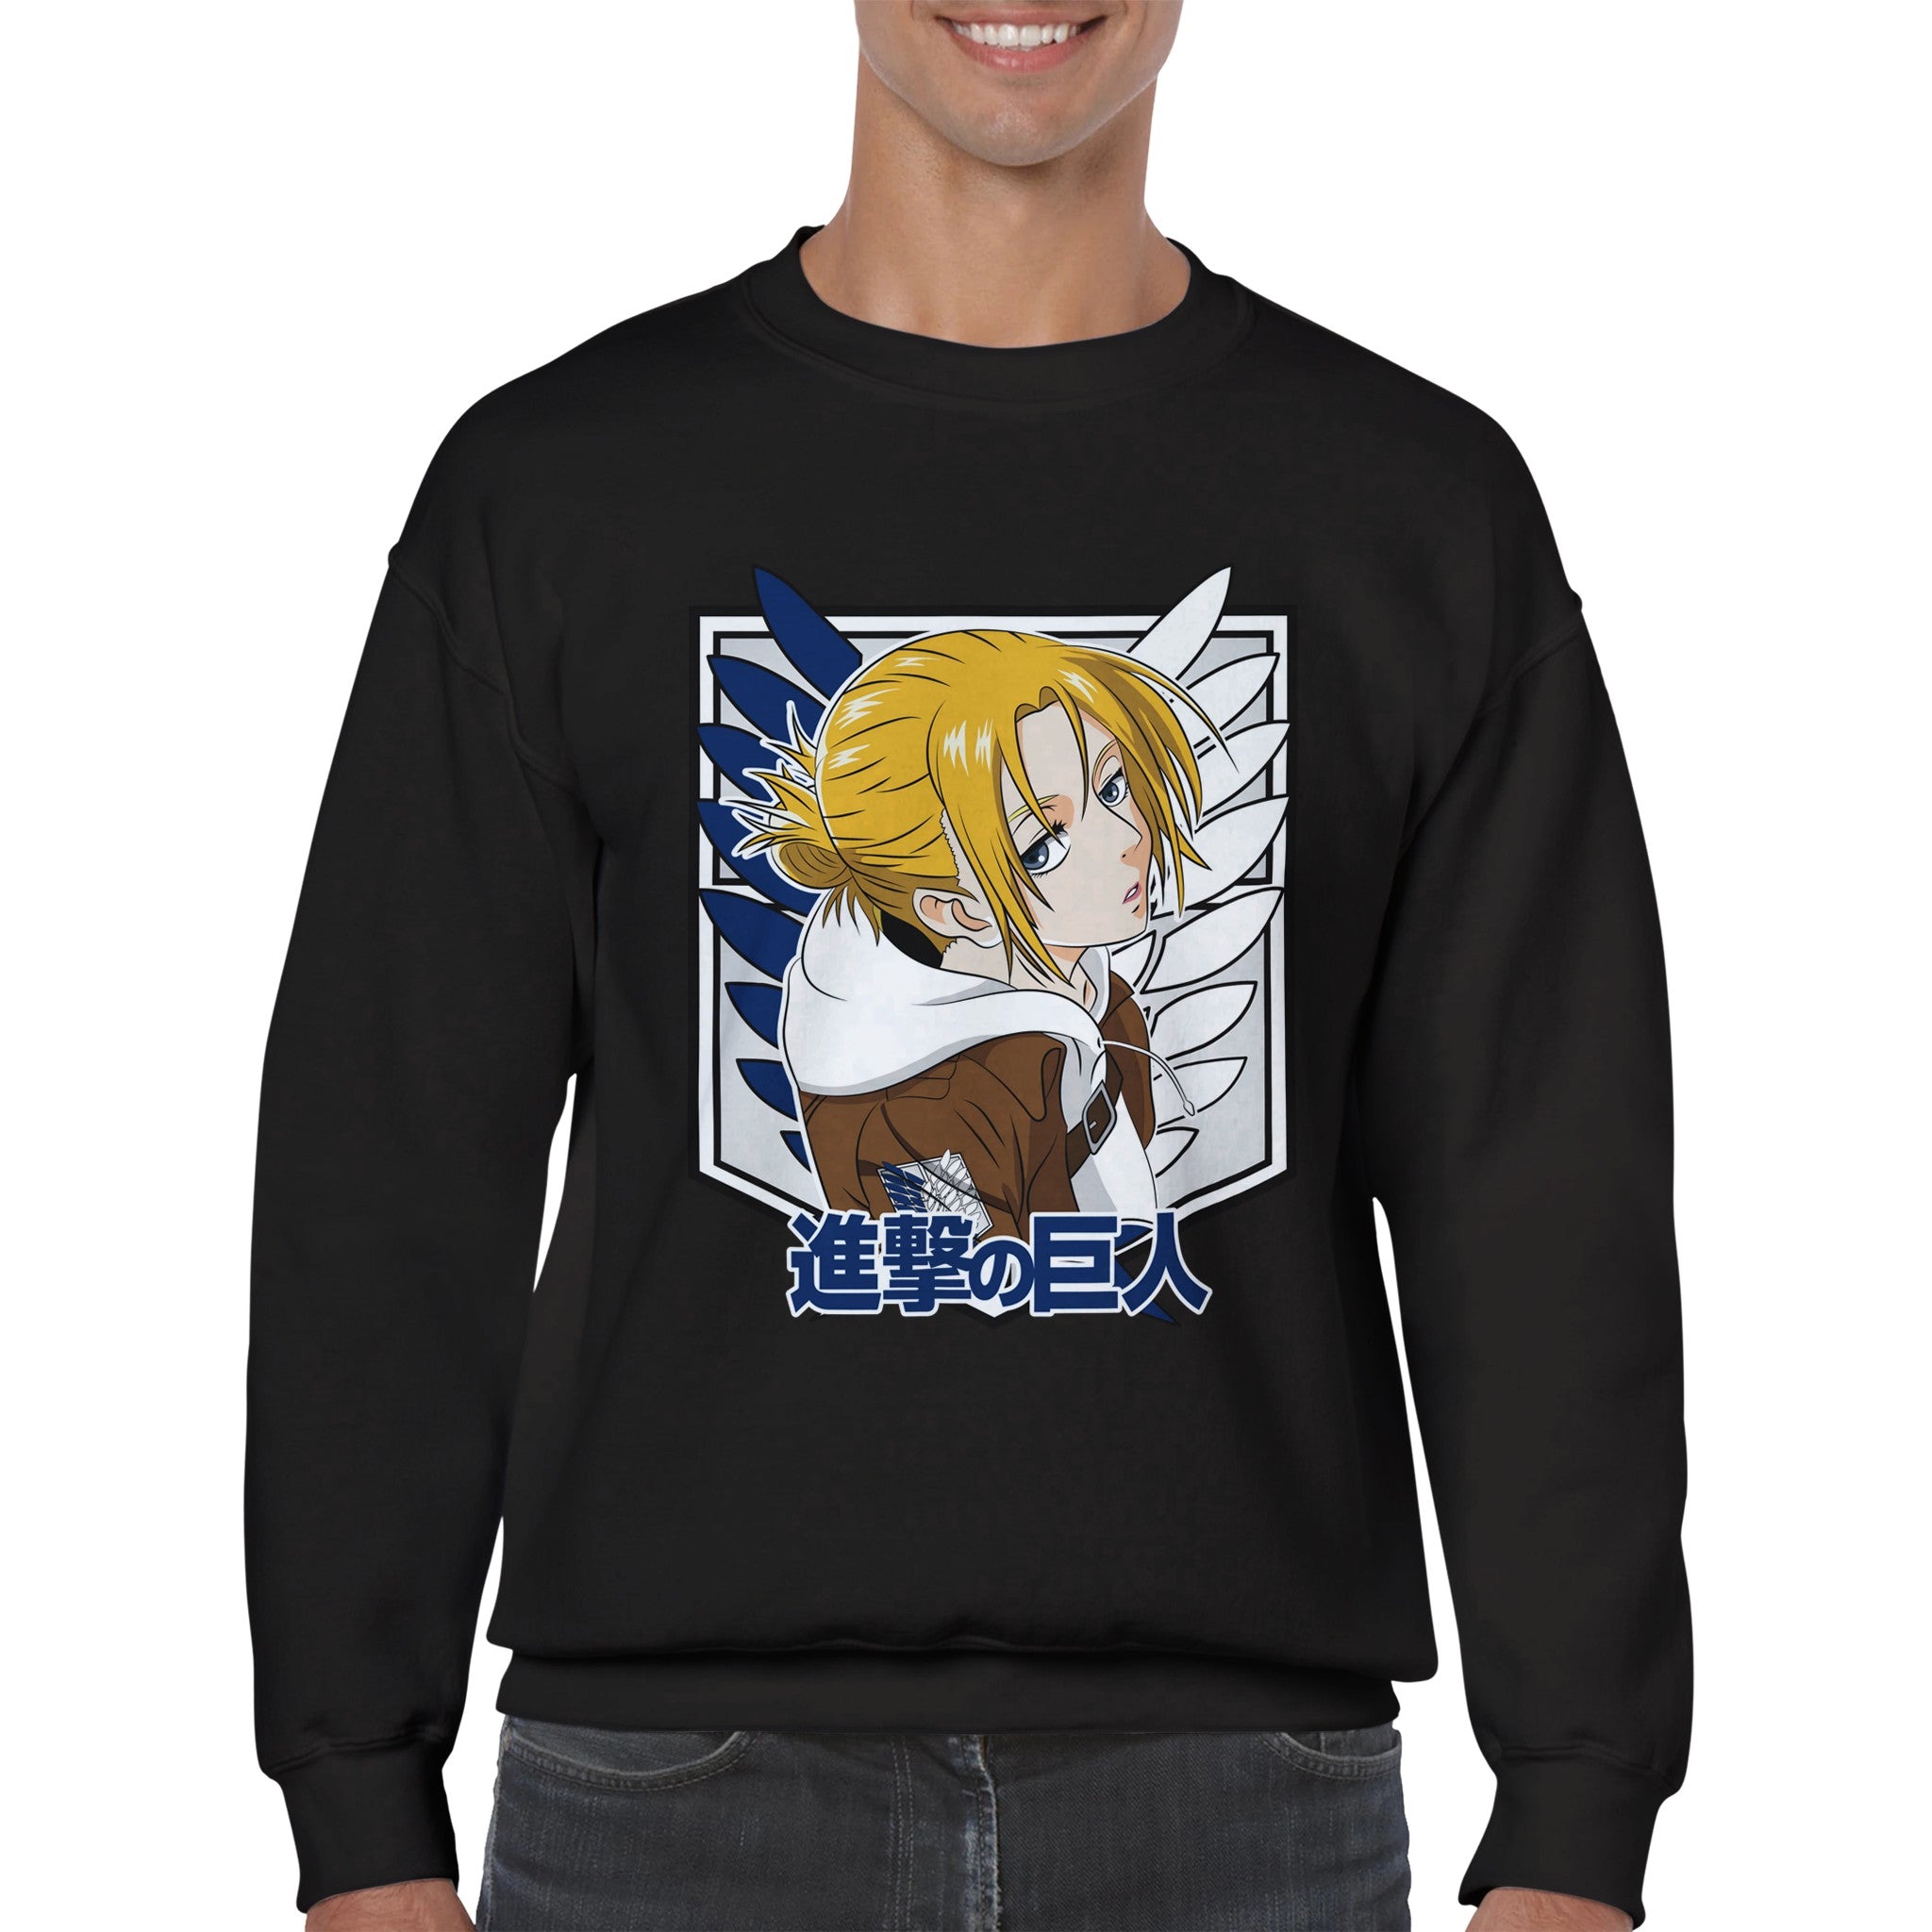 shop and buy attack on titan anime clothing annie sweatshirt/jumper/longsleeve